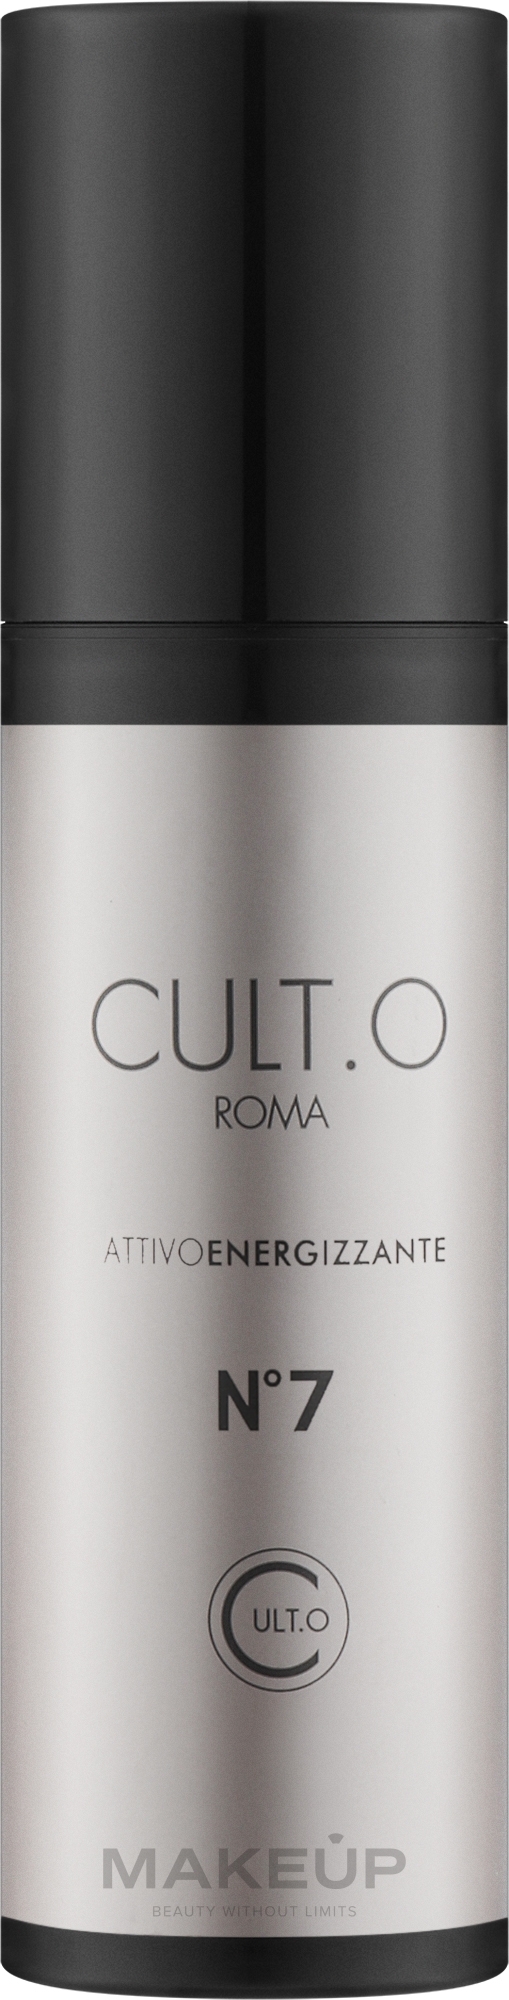 Konzentrat gegen Haarausfall - Cult.O Roma Attivo Energizante №7  — Bild 50 ml